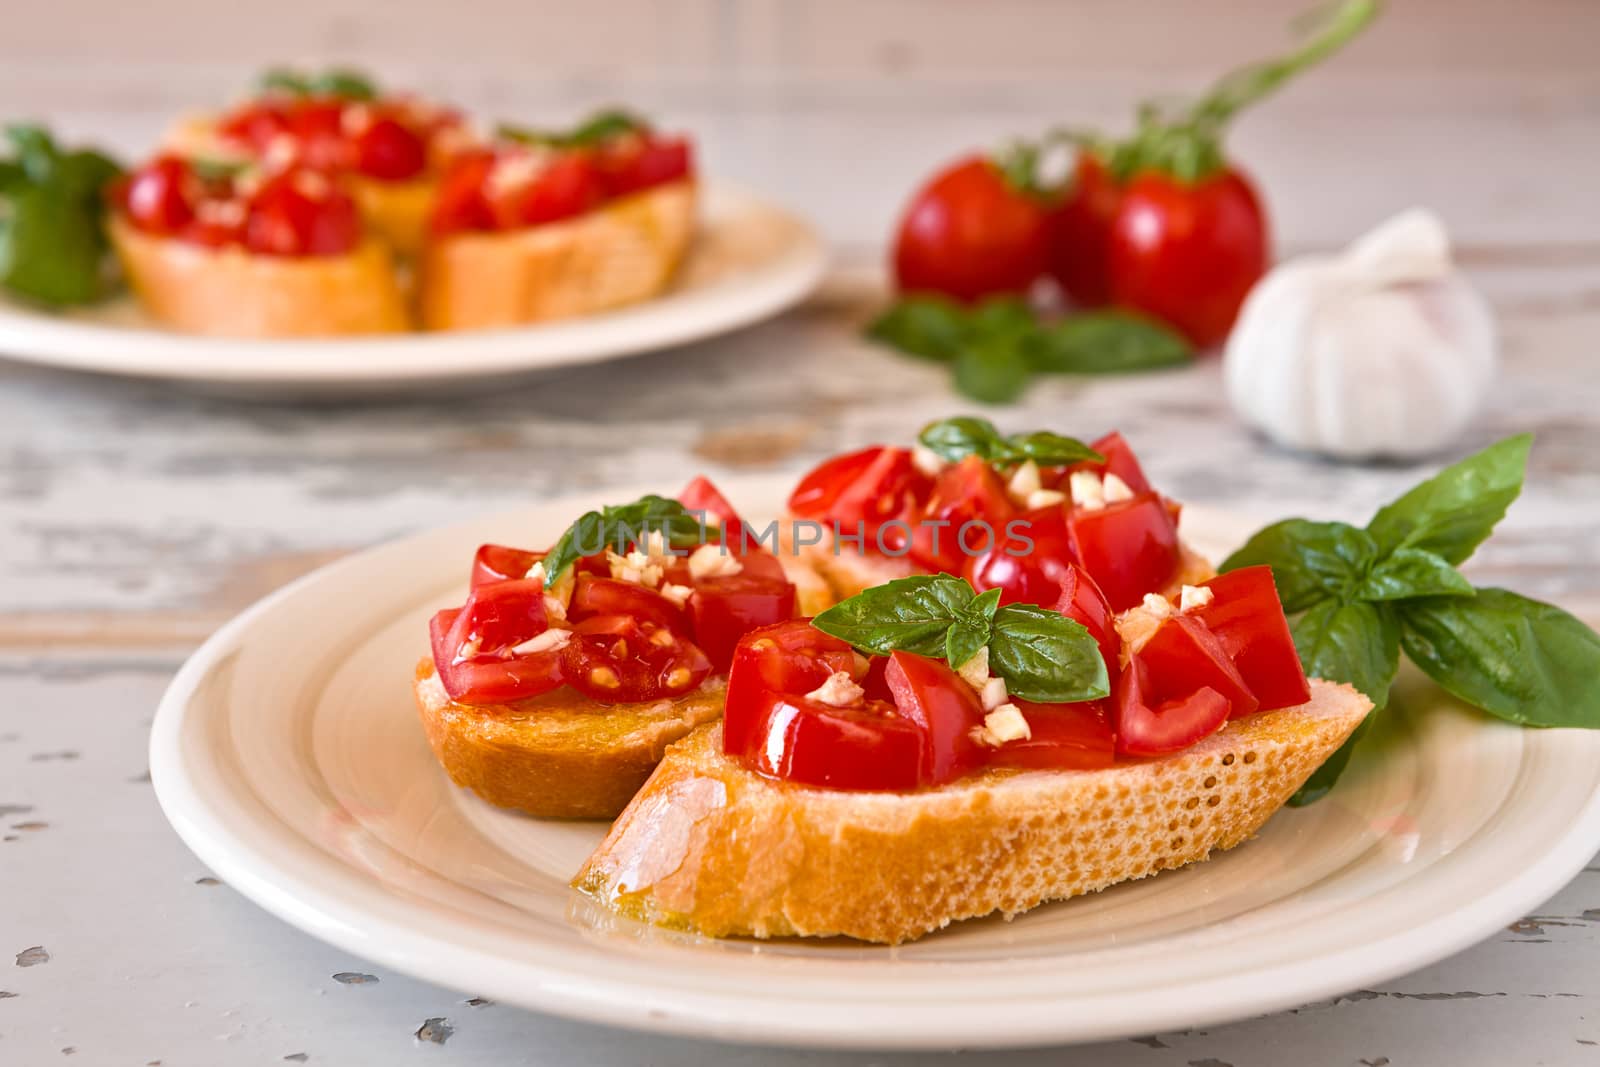 Closeup of Italian bruschetta with tomato, basil and garlic on a plate